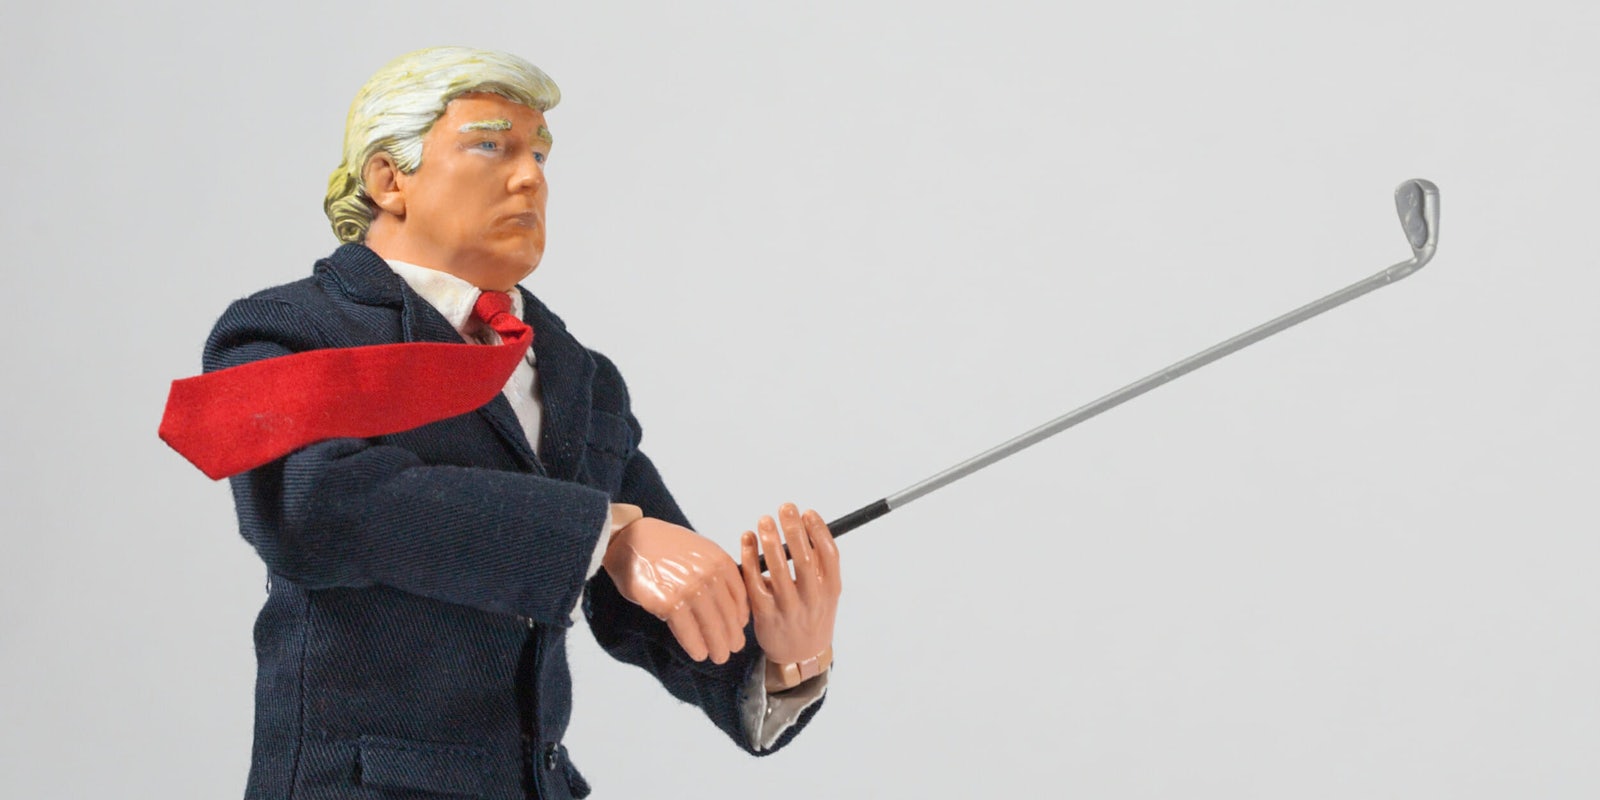 action figure trump golfing